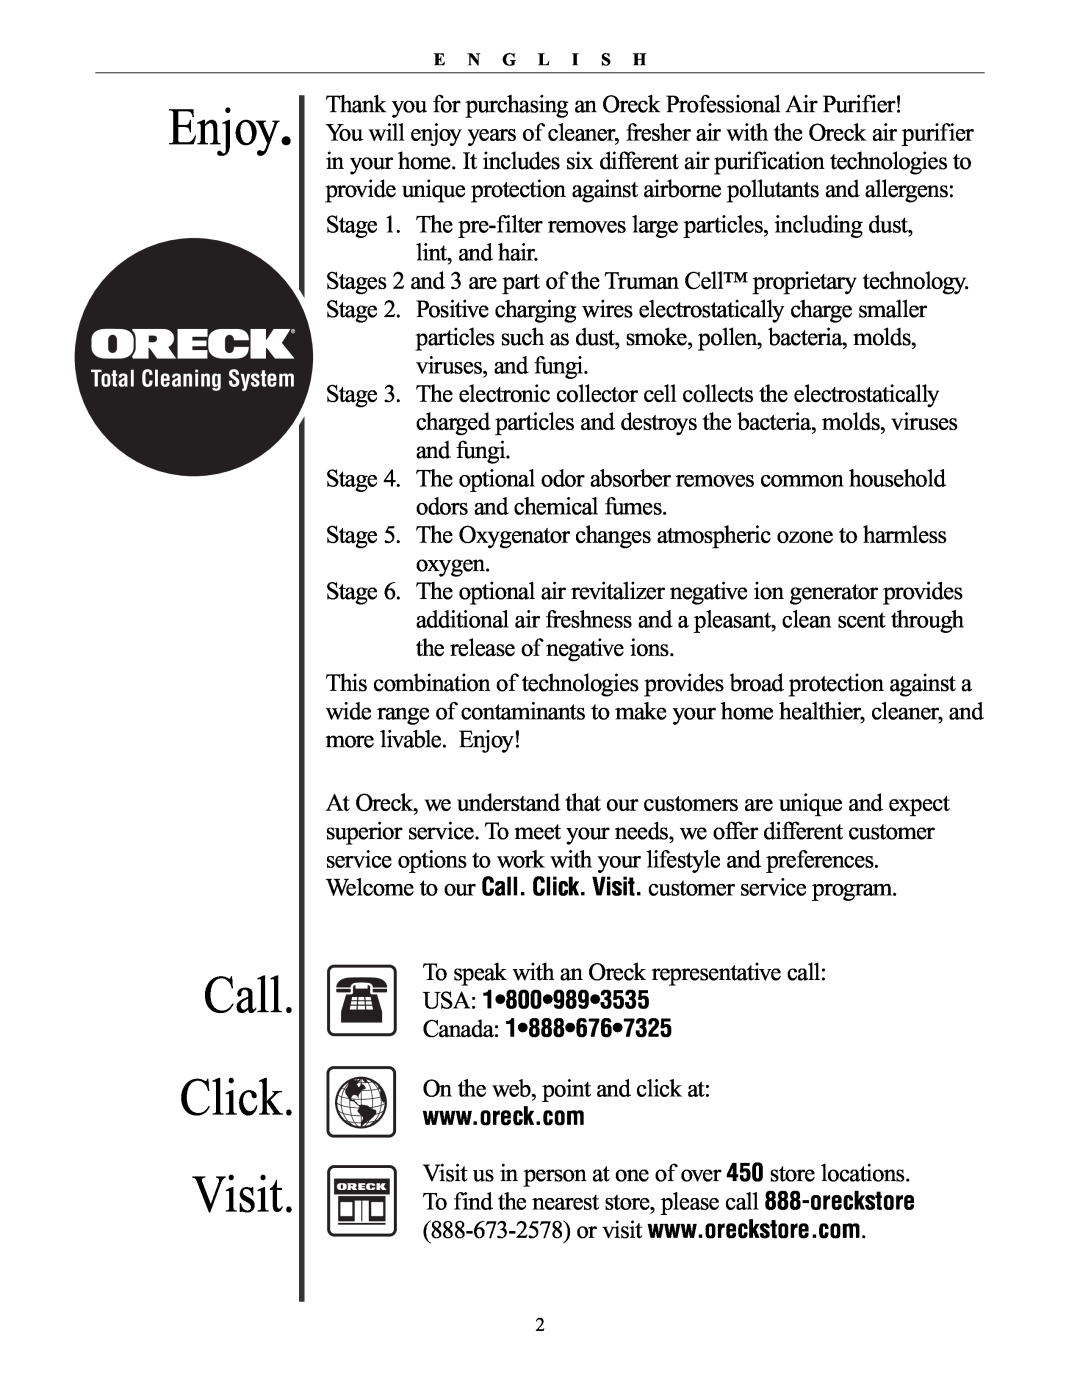 Oreck 20061-01Rev.A manual Enjoy, Call Click Visit, USA 18009893535 Canada 